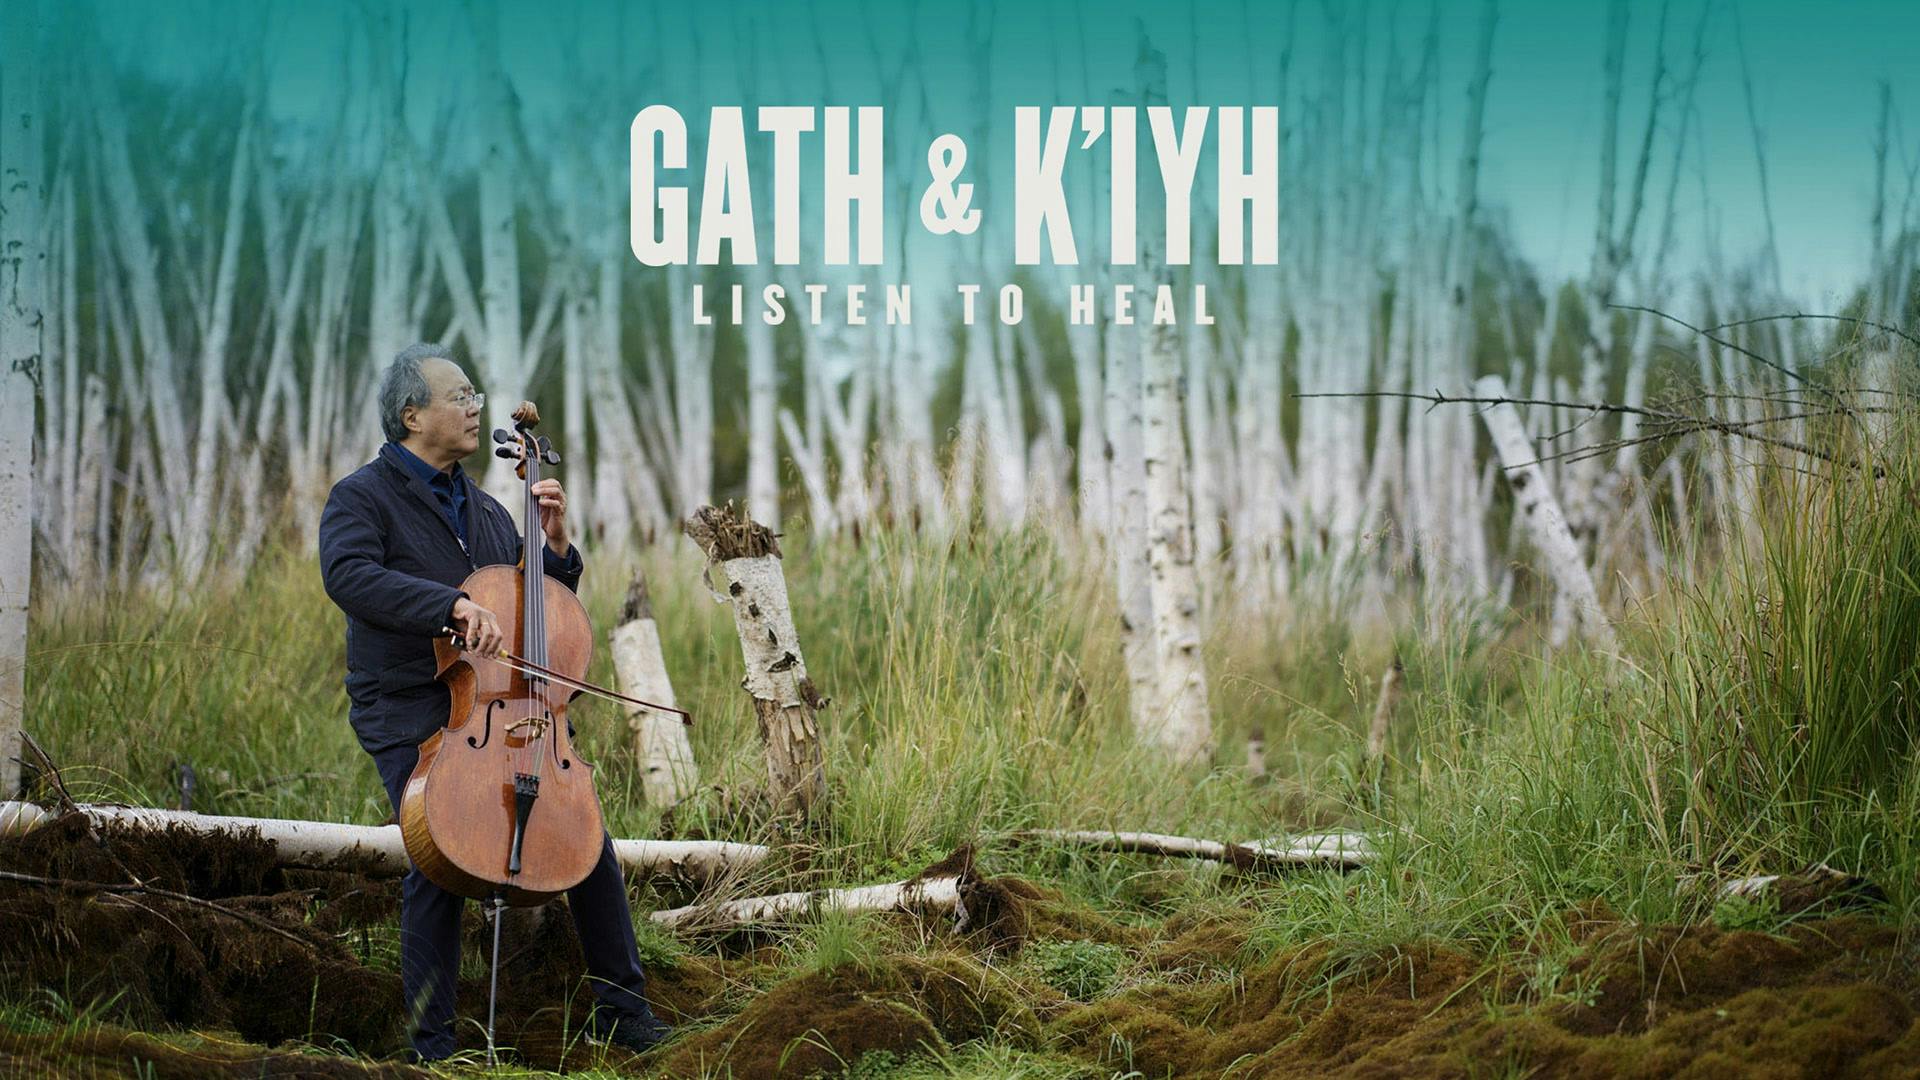 Gath & K'iyh: Listen to Heal